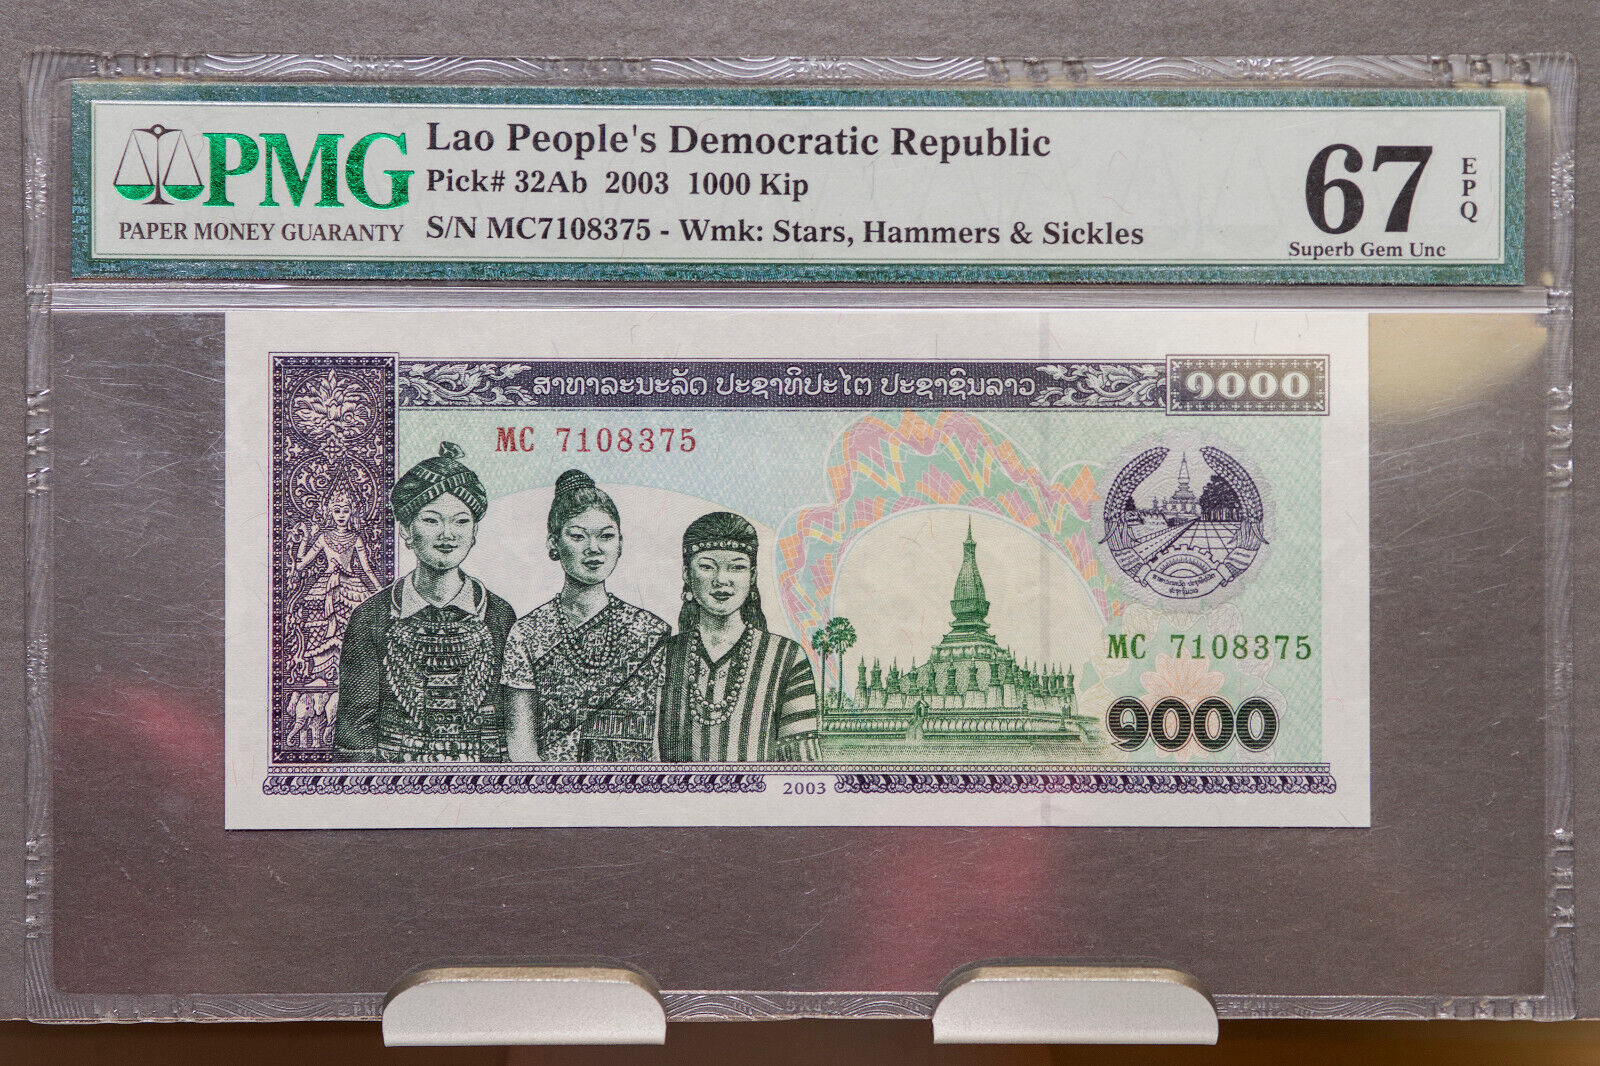 2003 Lao People's Democratic Republic 1000 Kip Pick #32Ab PMG 67 Superb Gem Unc